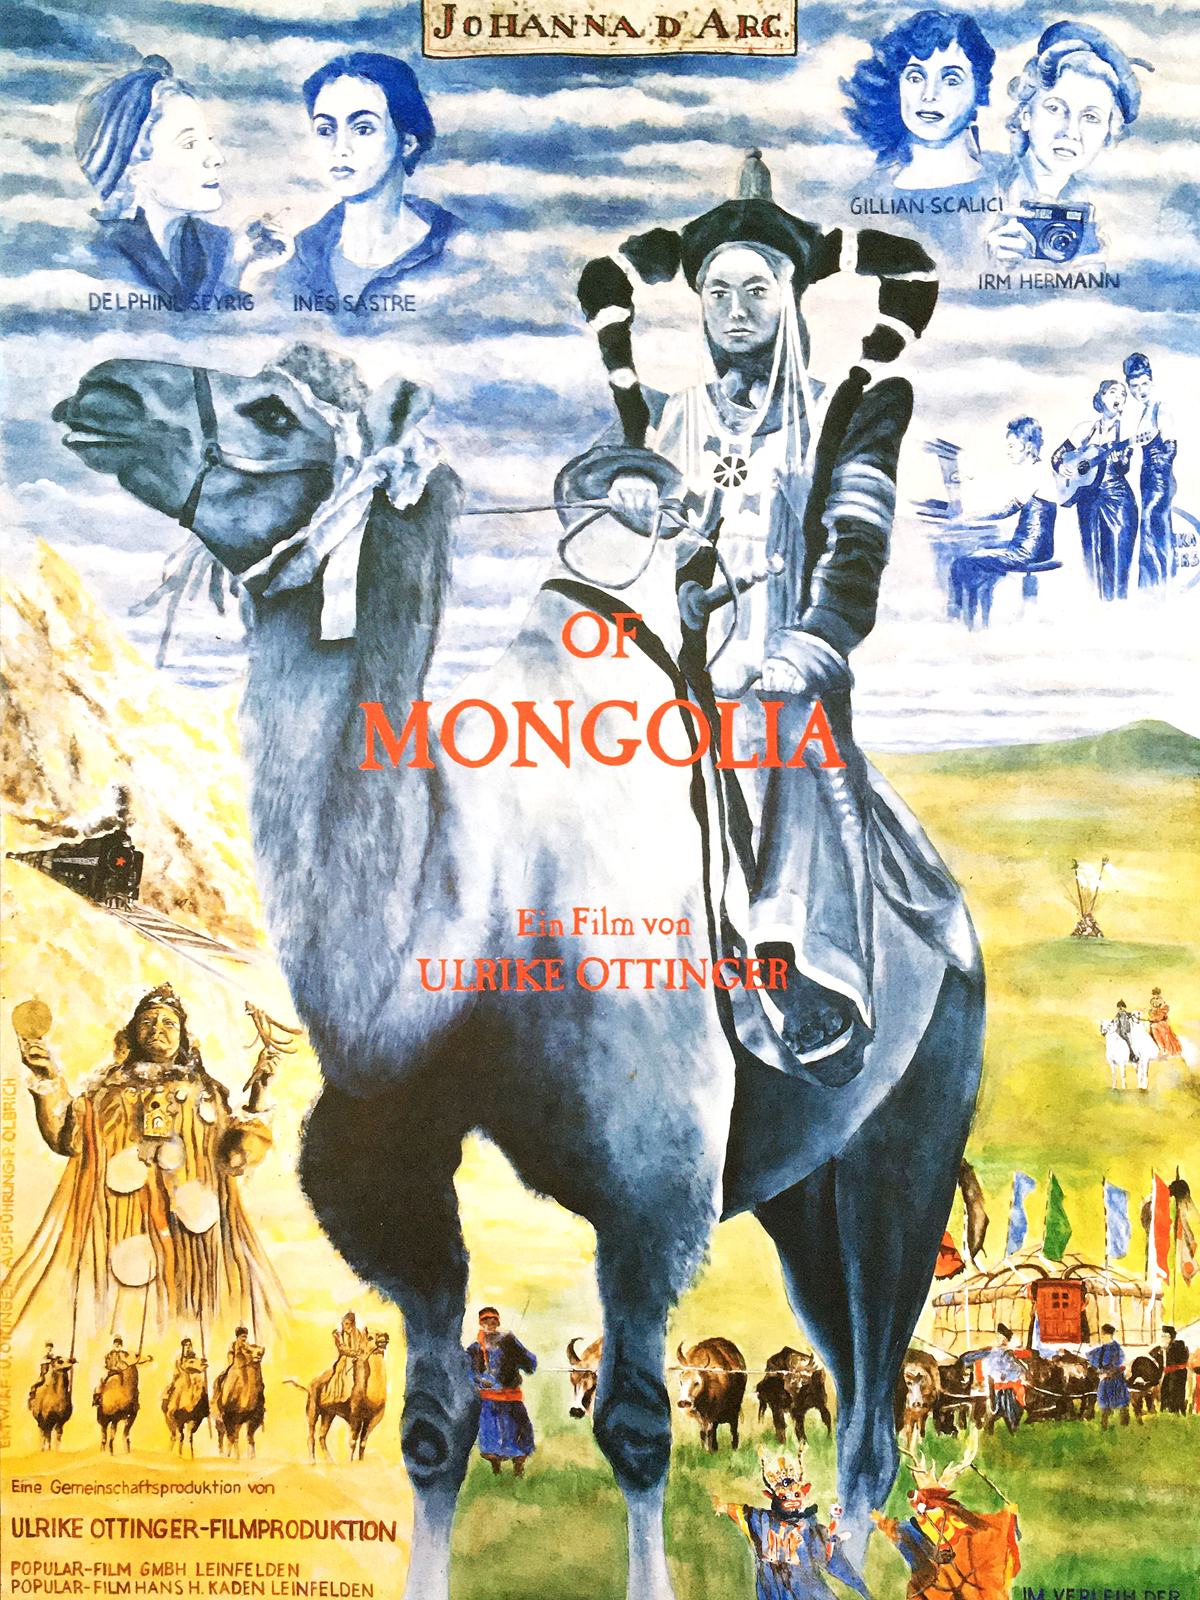 Jeanne d'Arc of Mongolia